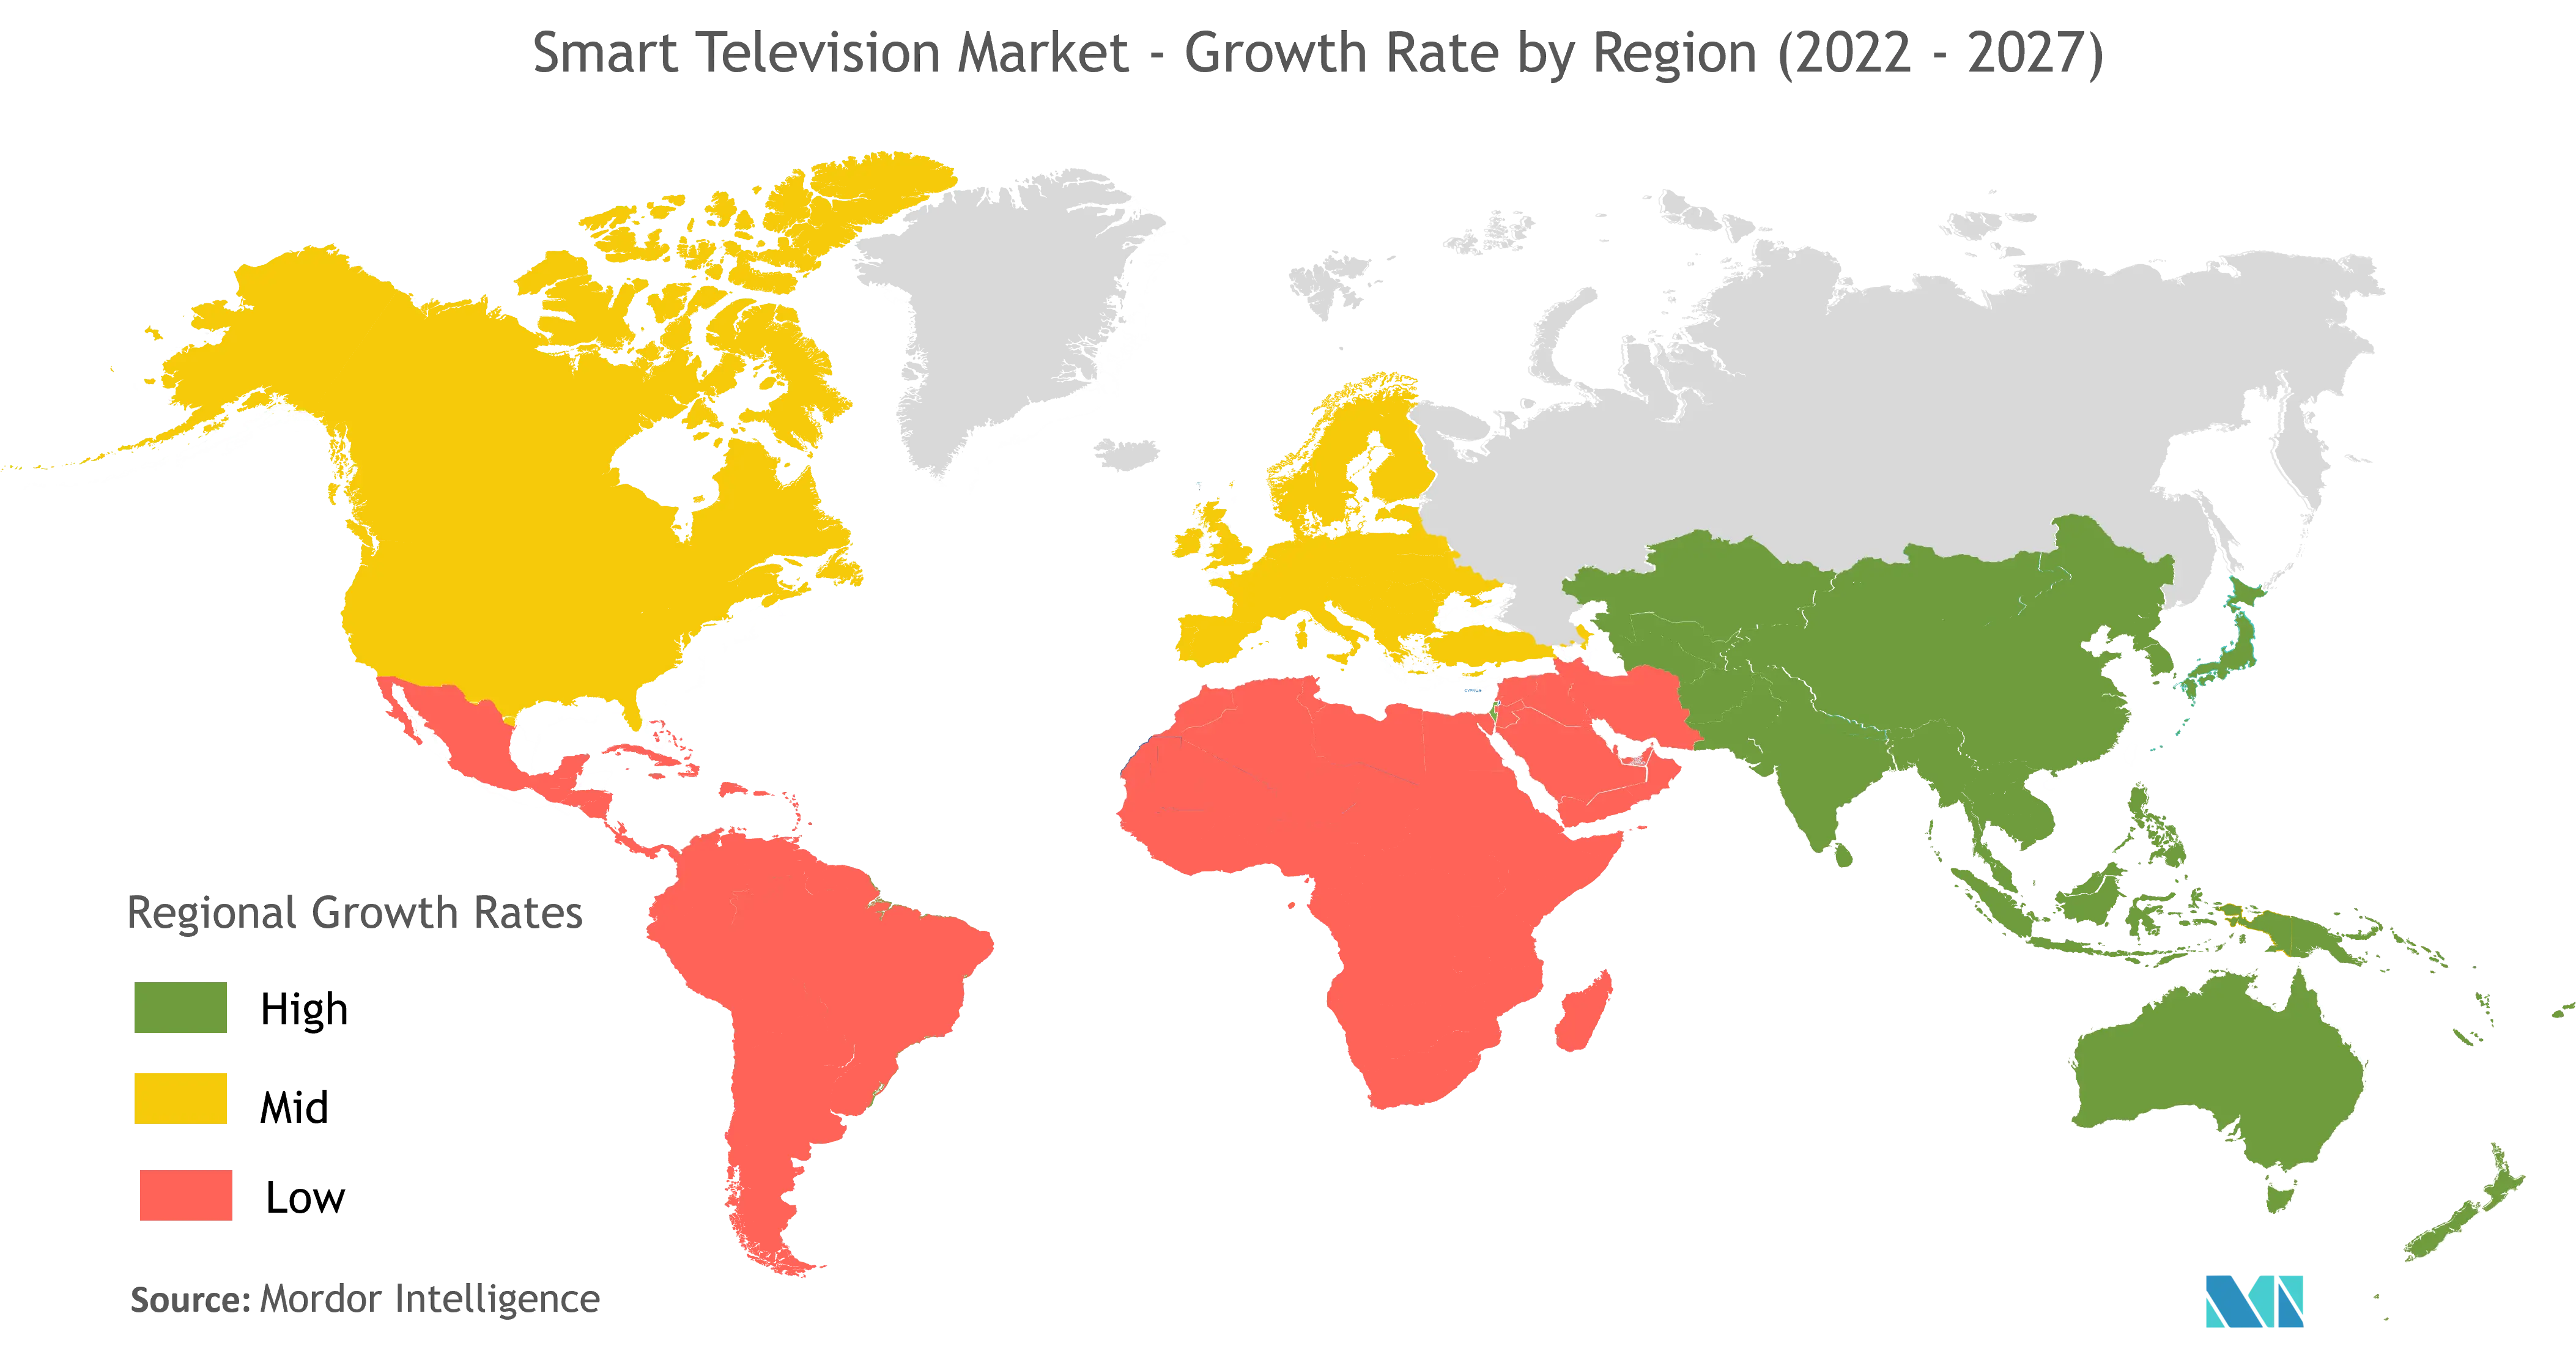 Smart TV Market - Growth Rate by Region (2022-2027)